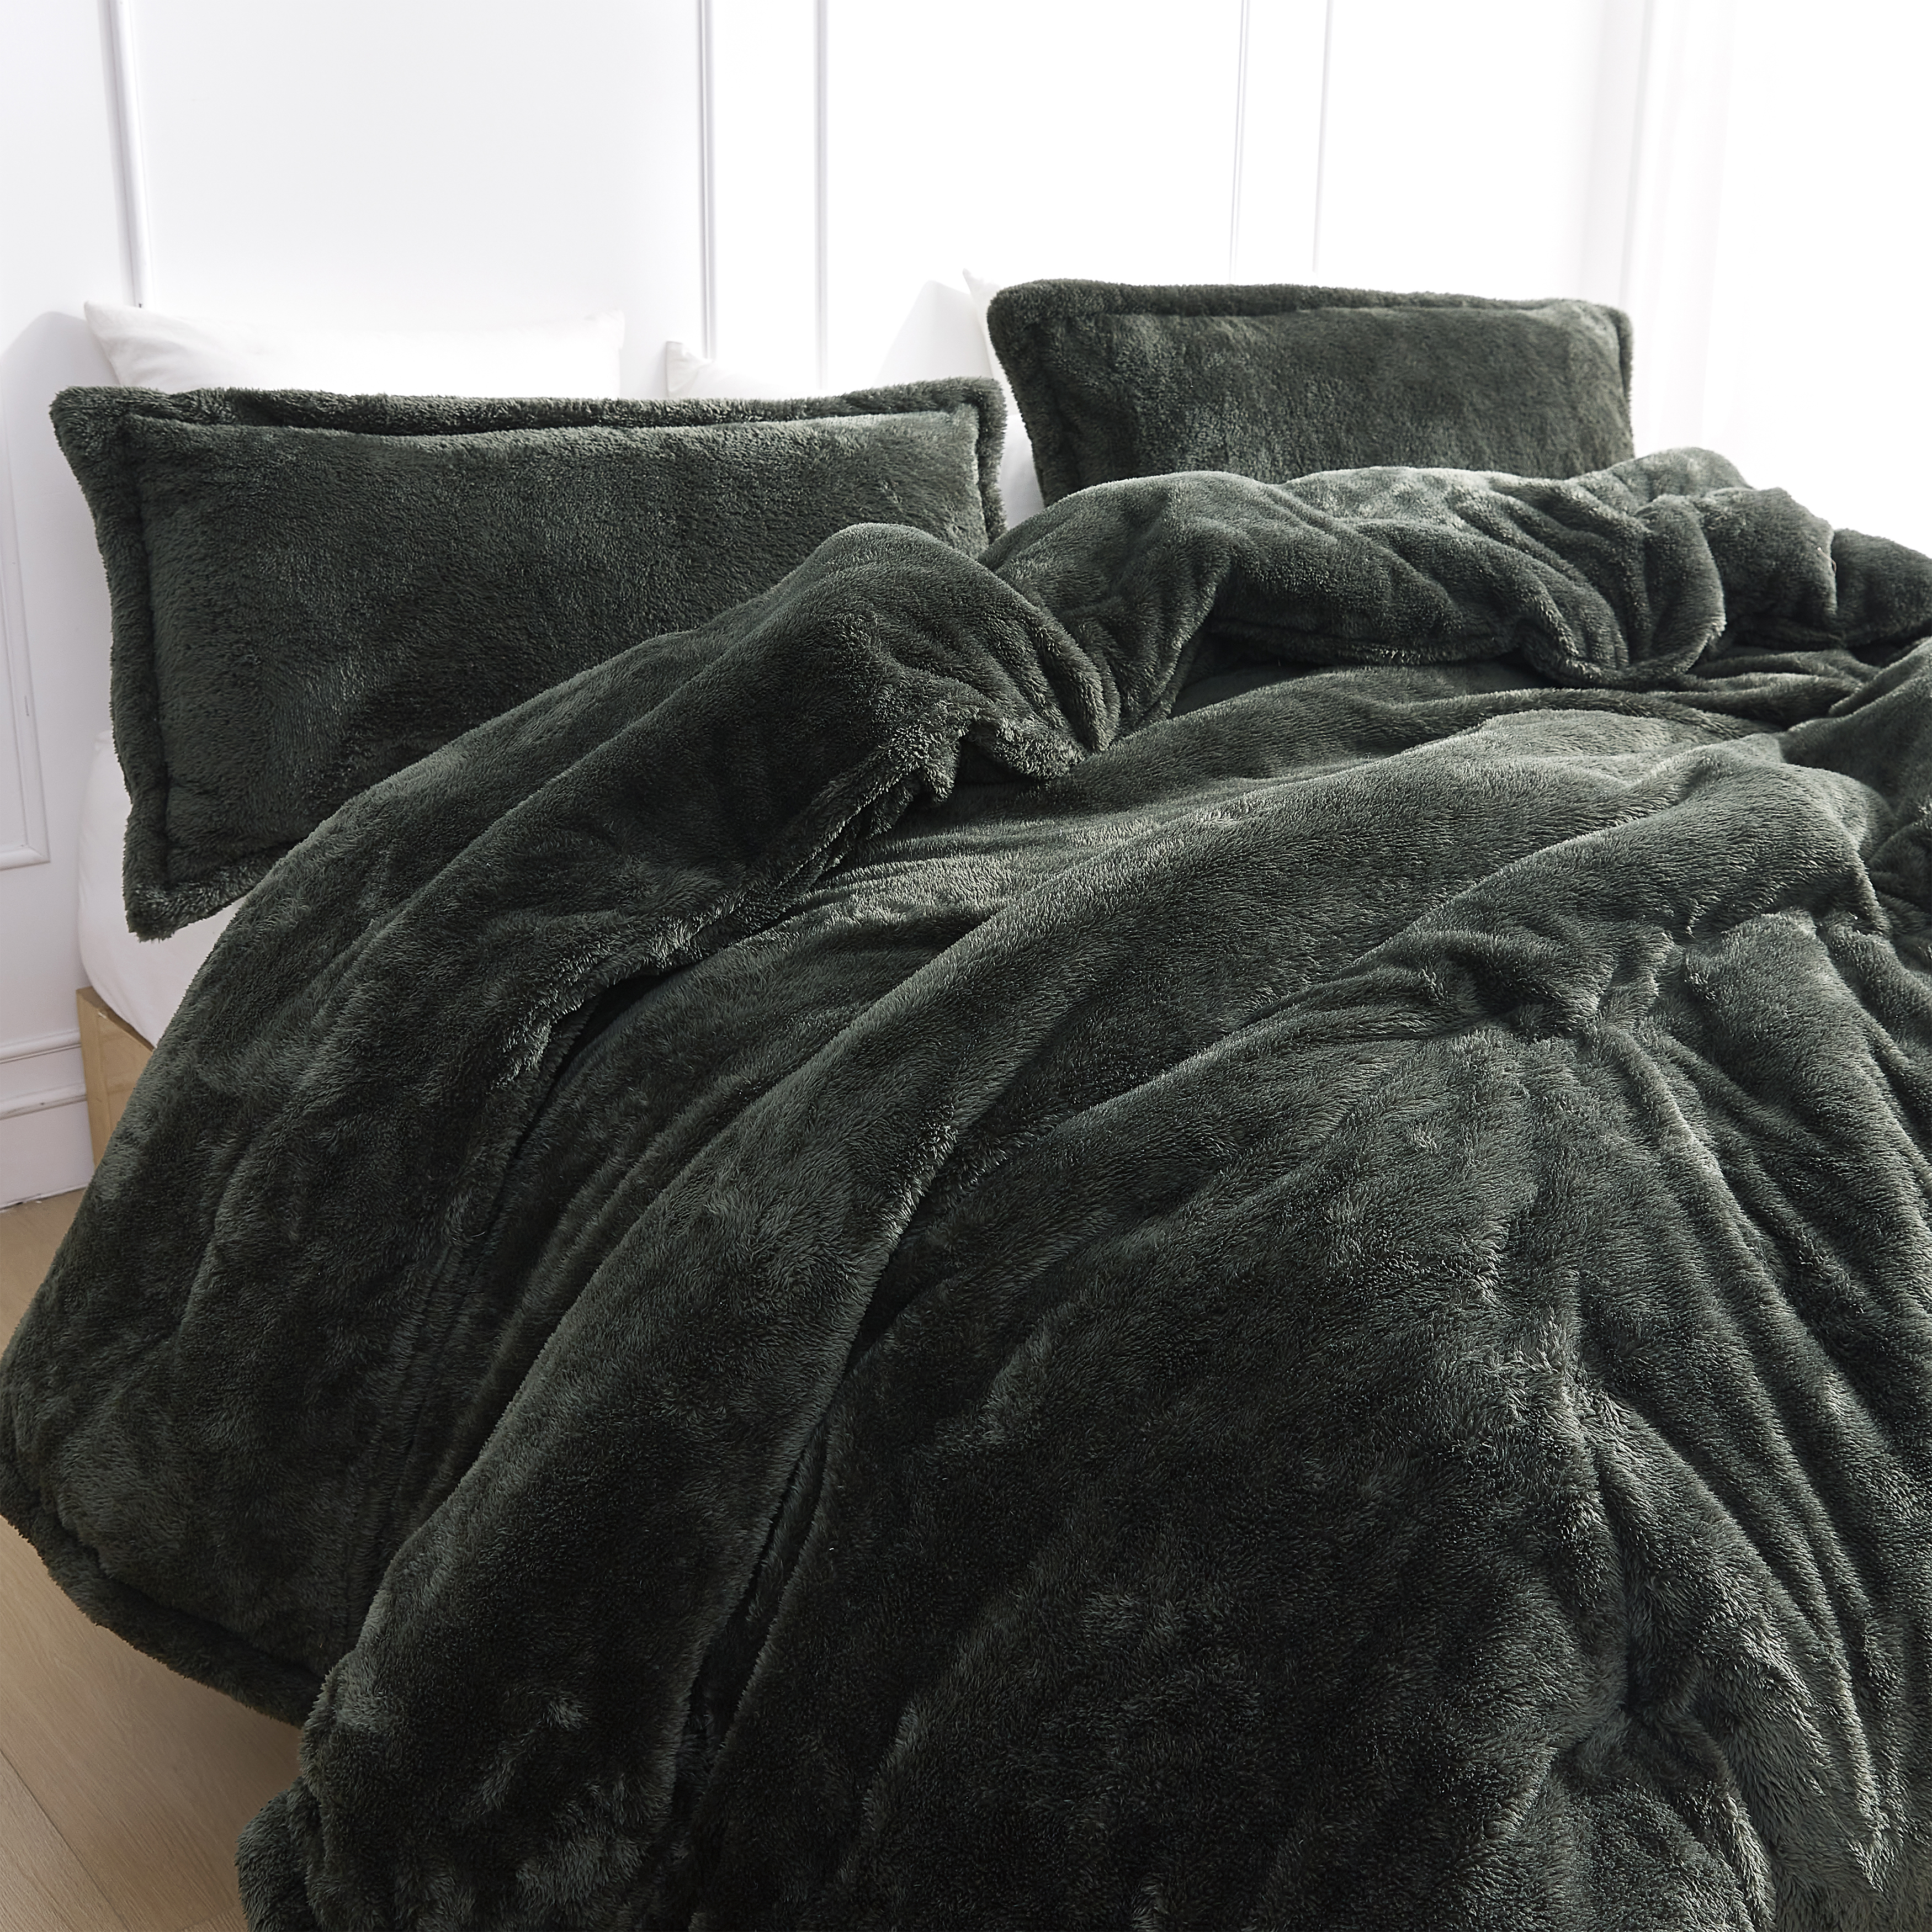 Coma Inducer Oversized Comforter - The Original Plush - Dark Forest